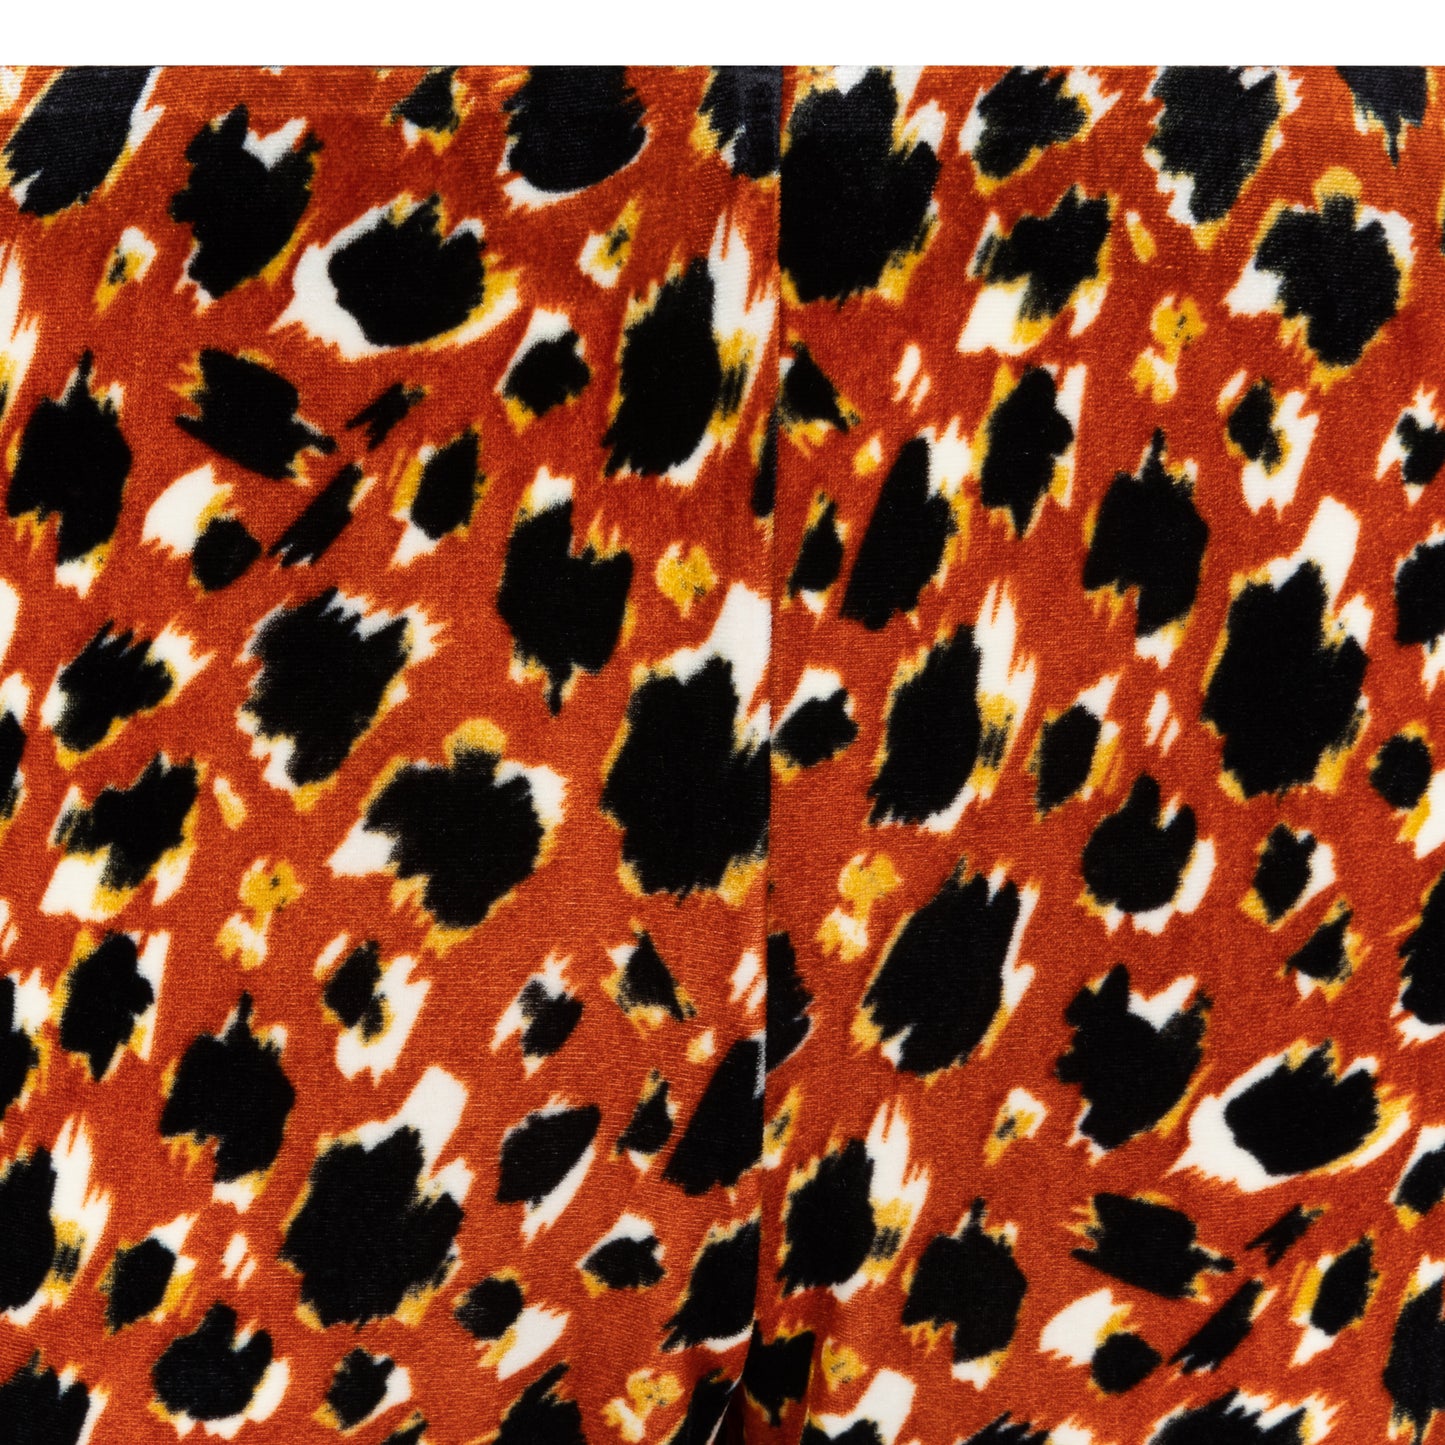 ESQUALO Orange Velvet Leopard Flared Pants